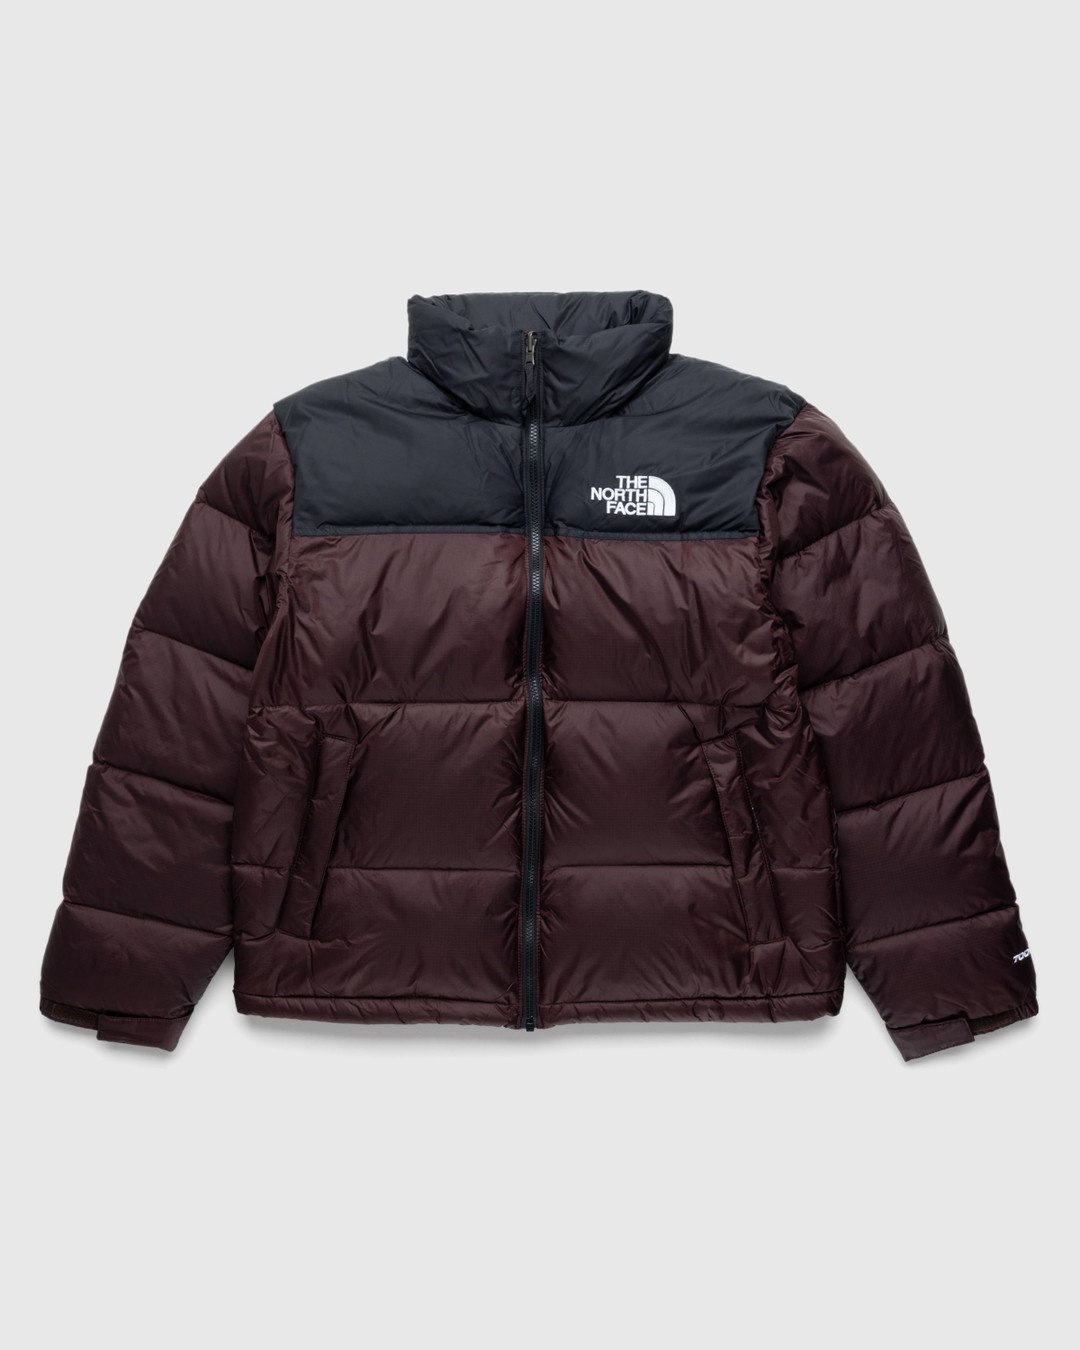 The North Face – 1996 Retro Nuptse Jacket Brown | Highsnobiety Shop